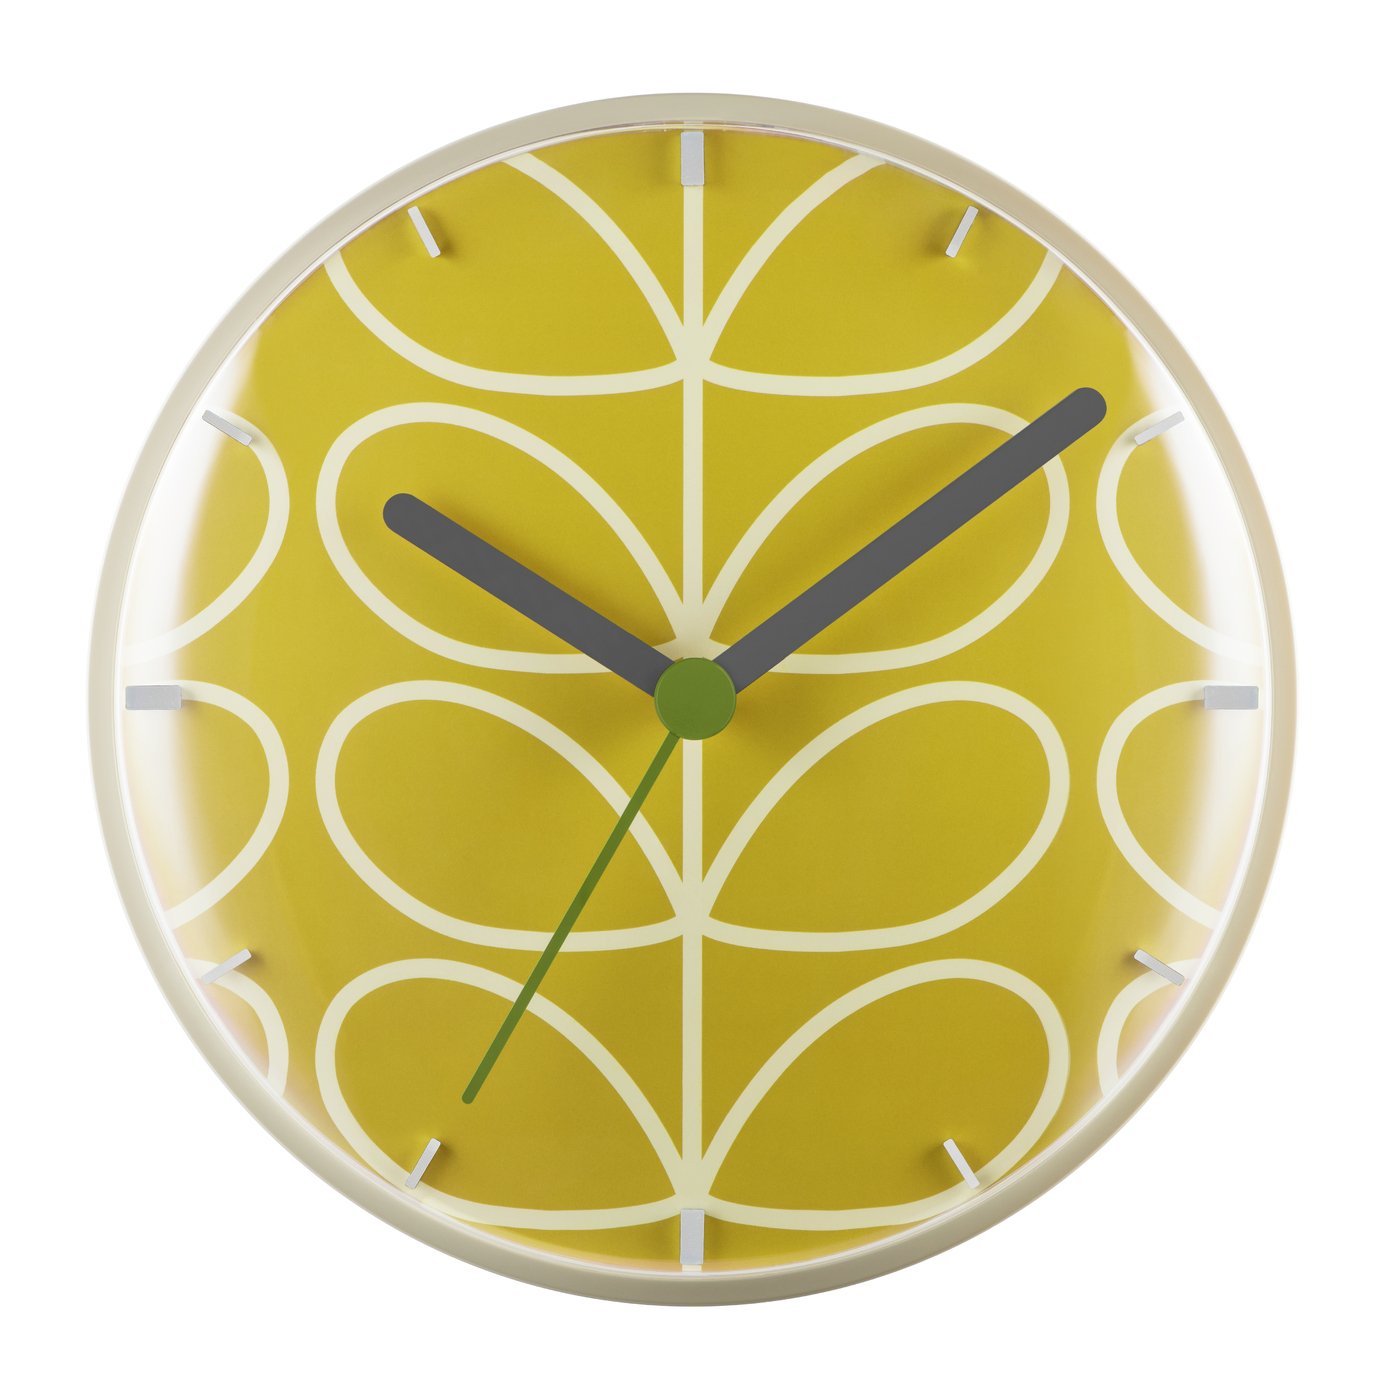 Orla Kiely Wall Clock - Mustard